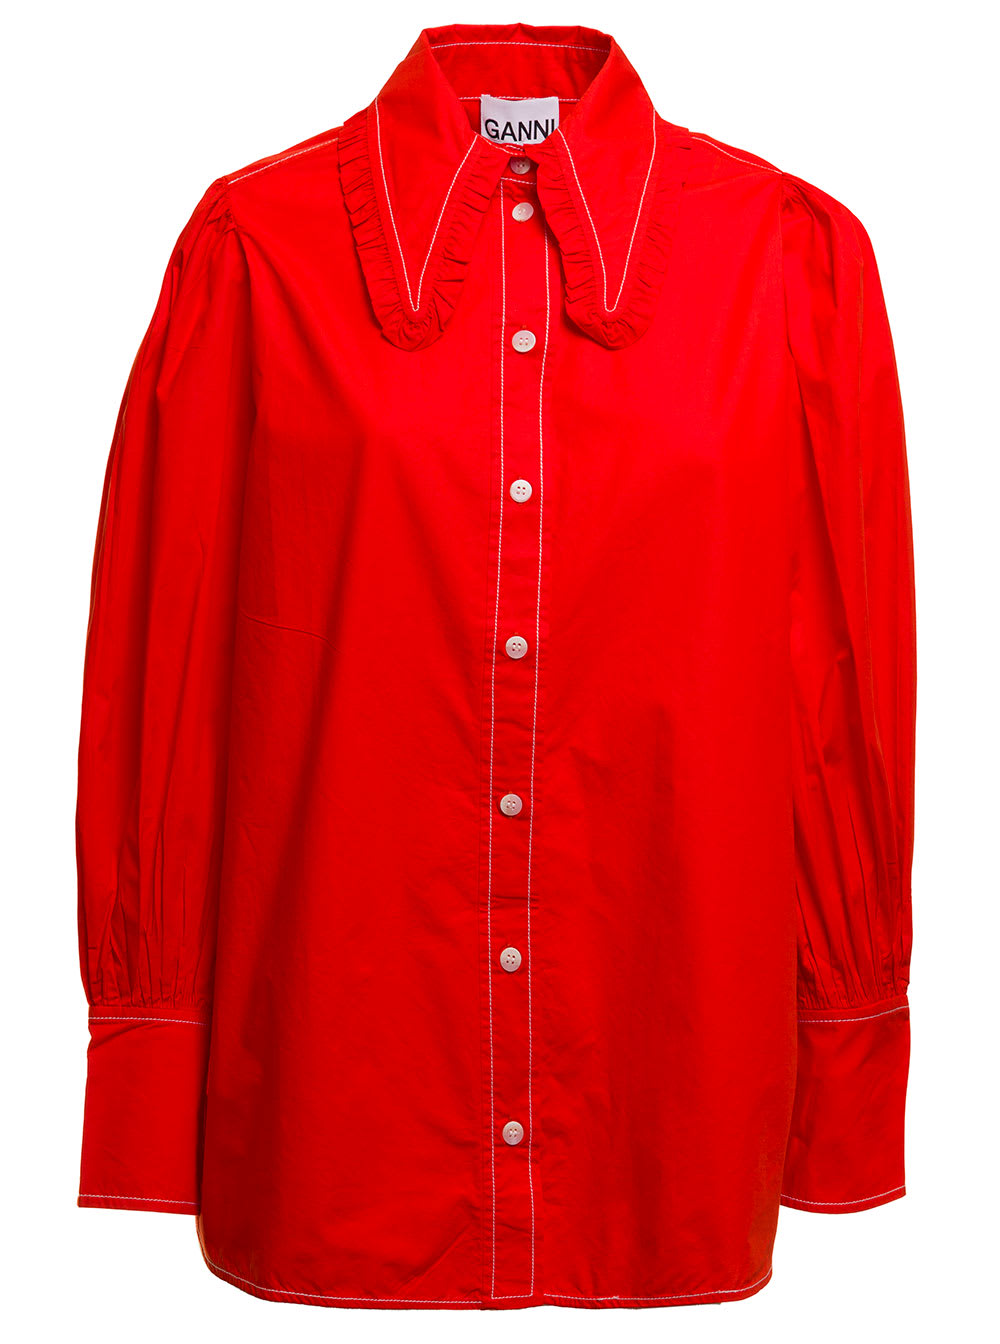 Ganni Womans Red Cotton Poplin Shirt